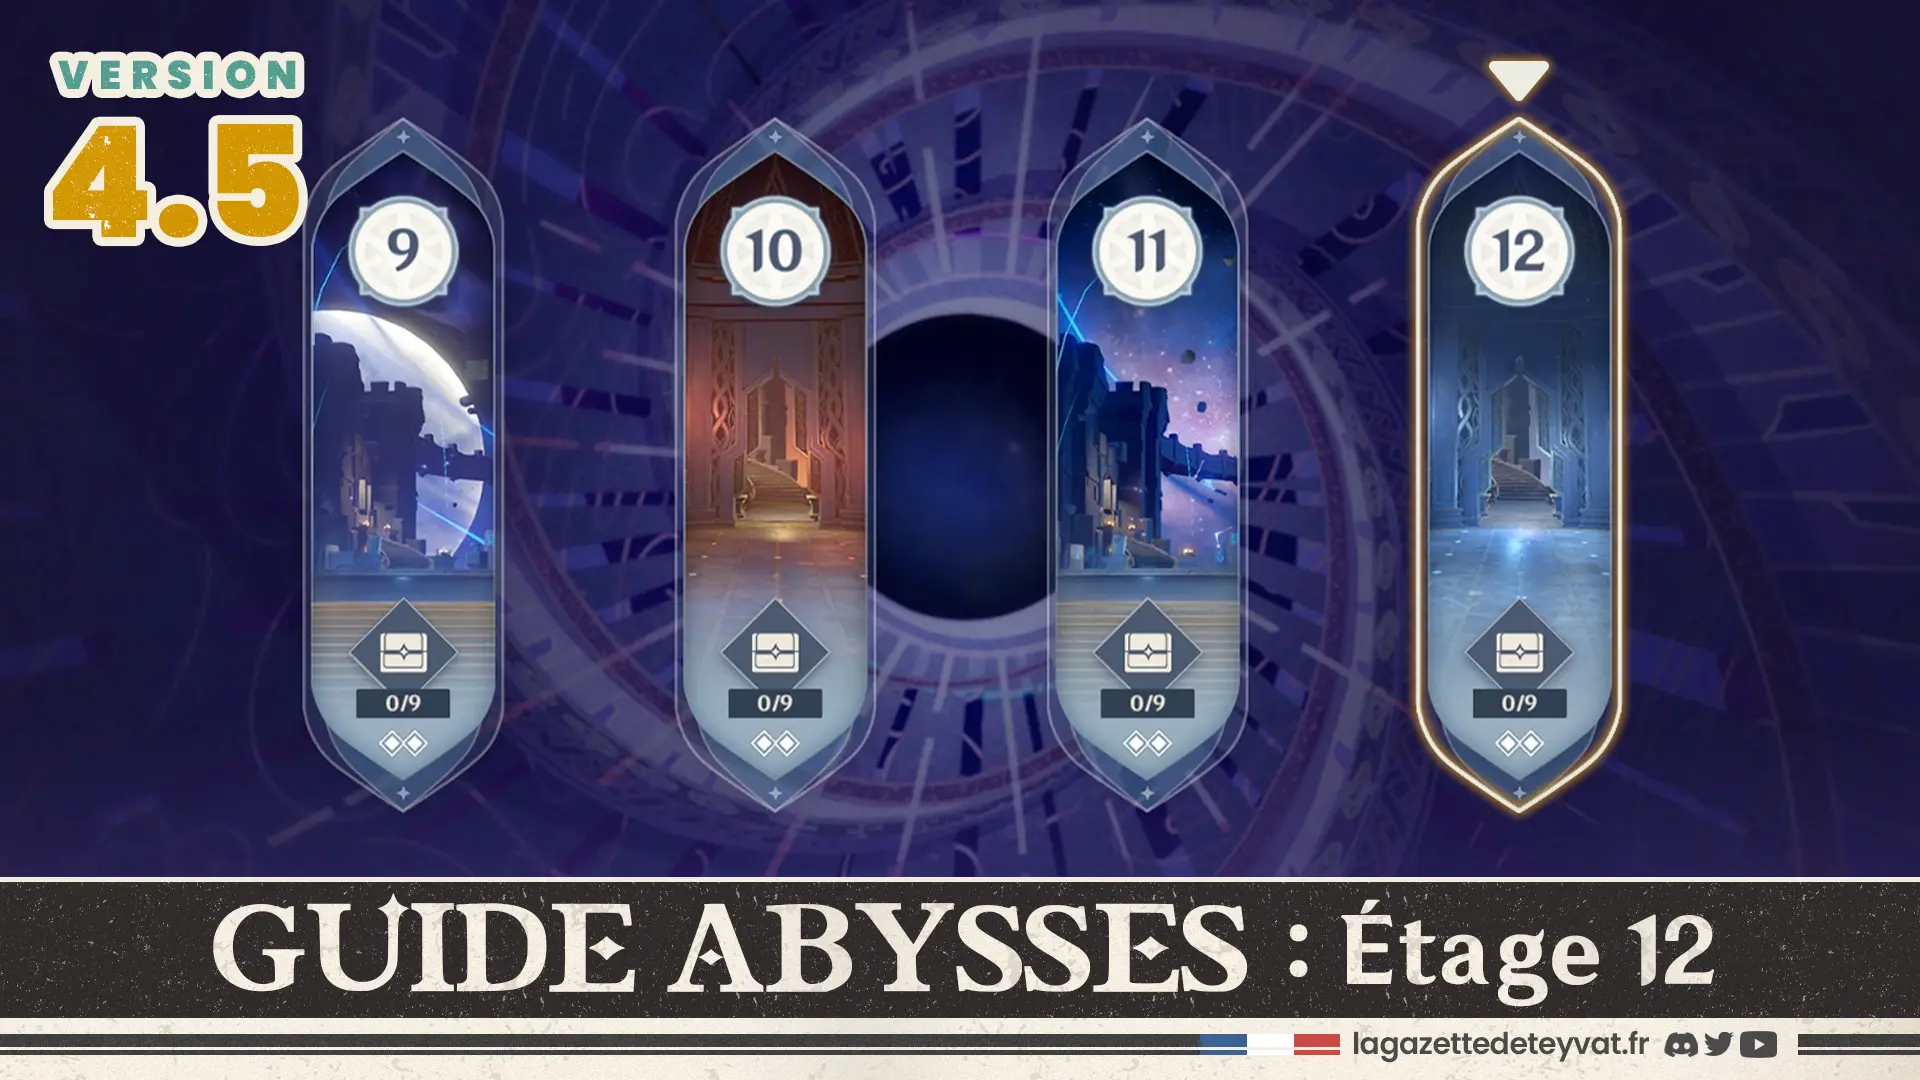 Abysses 4.5 étage 12